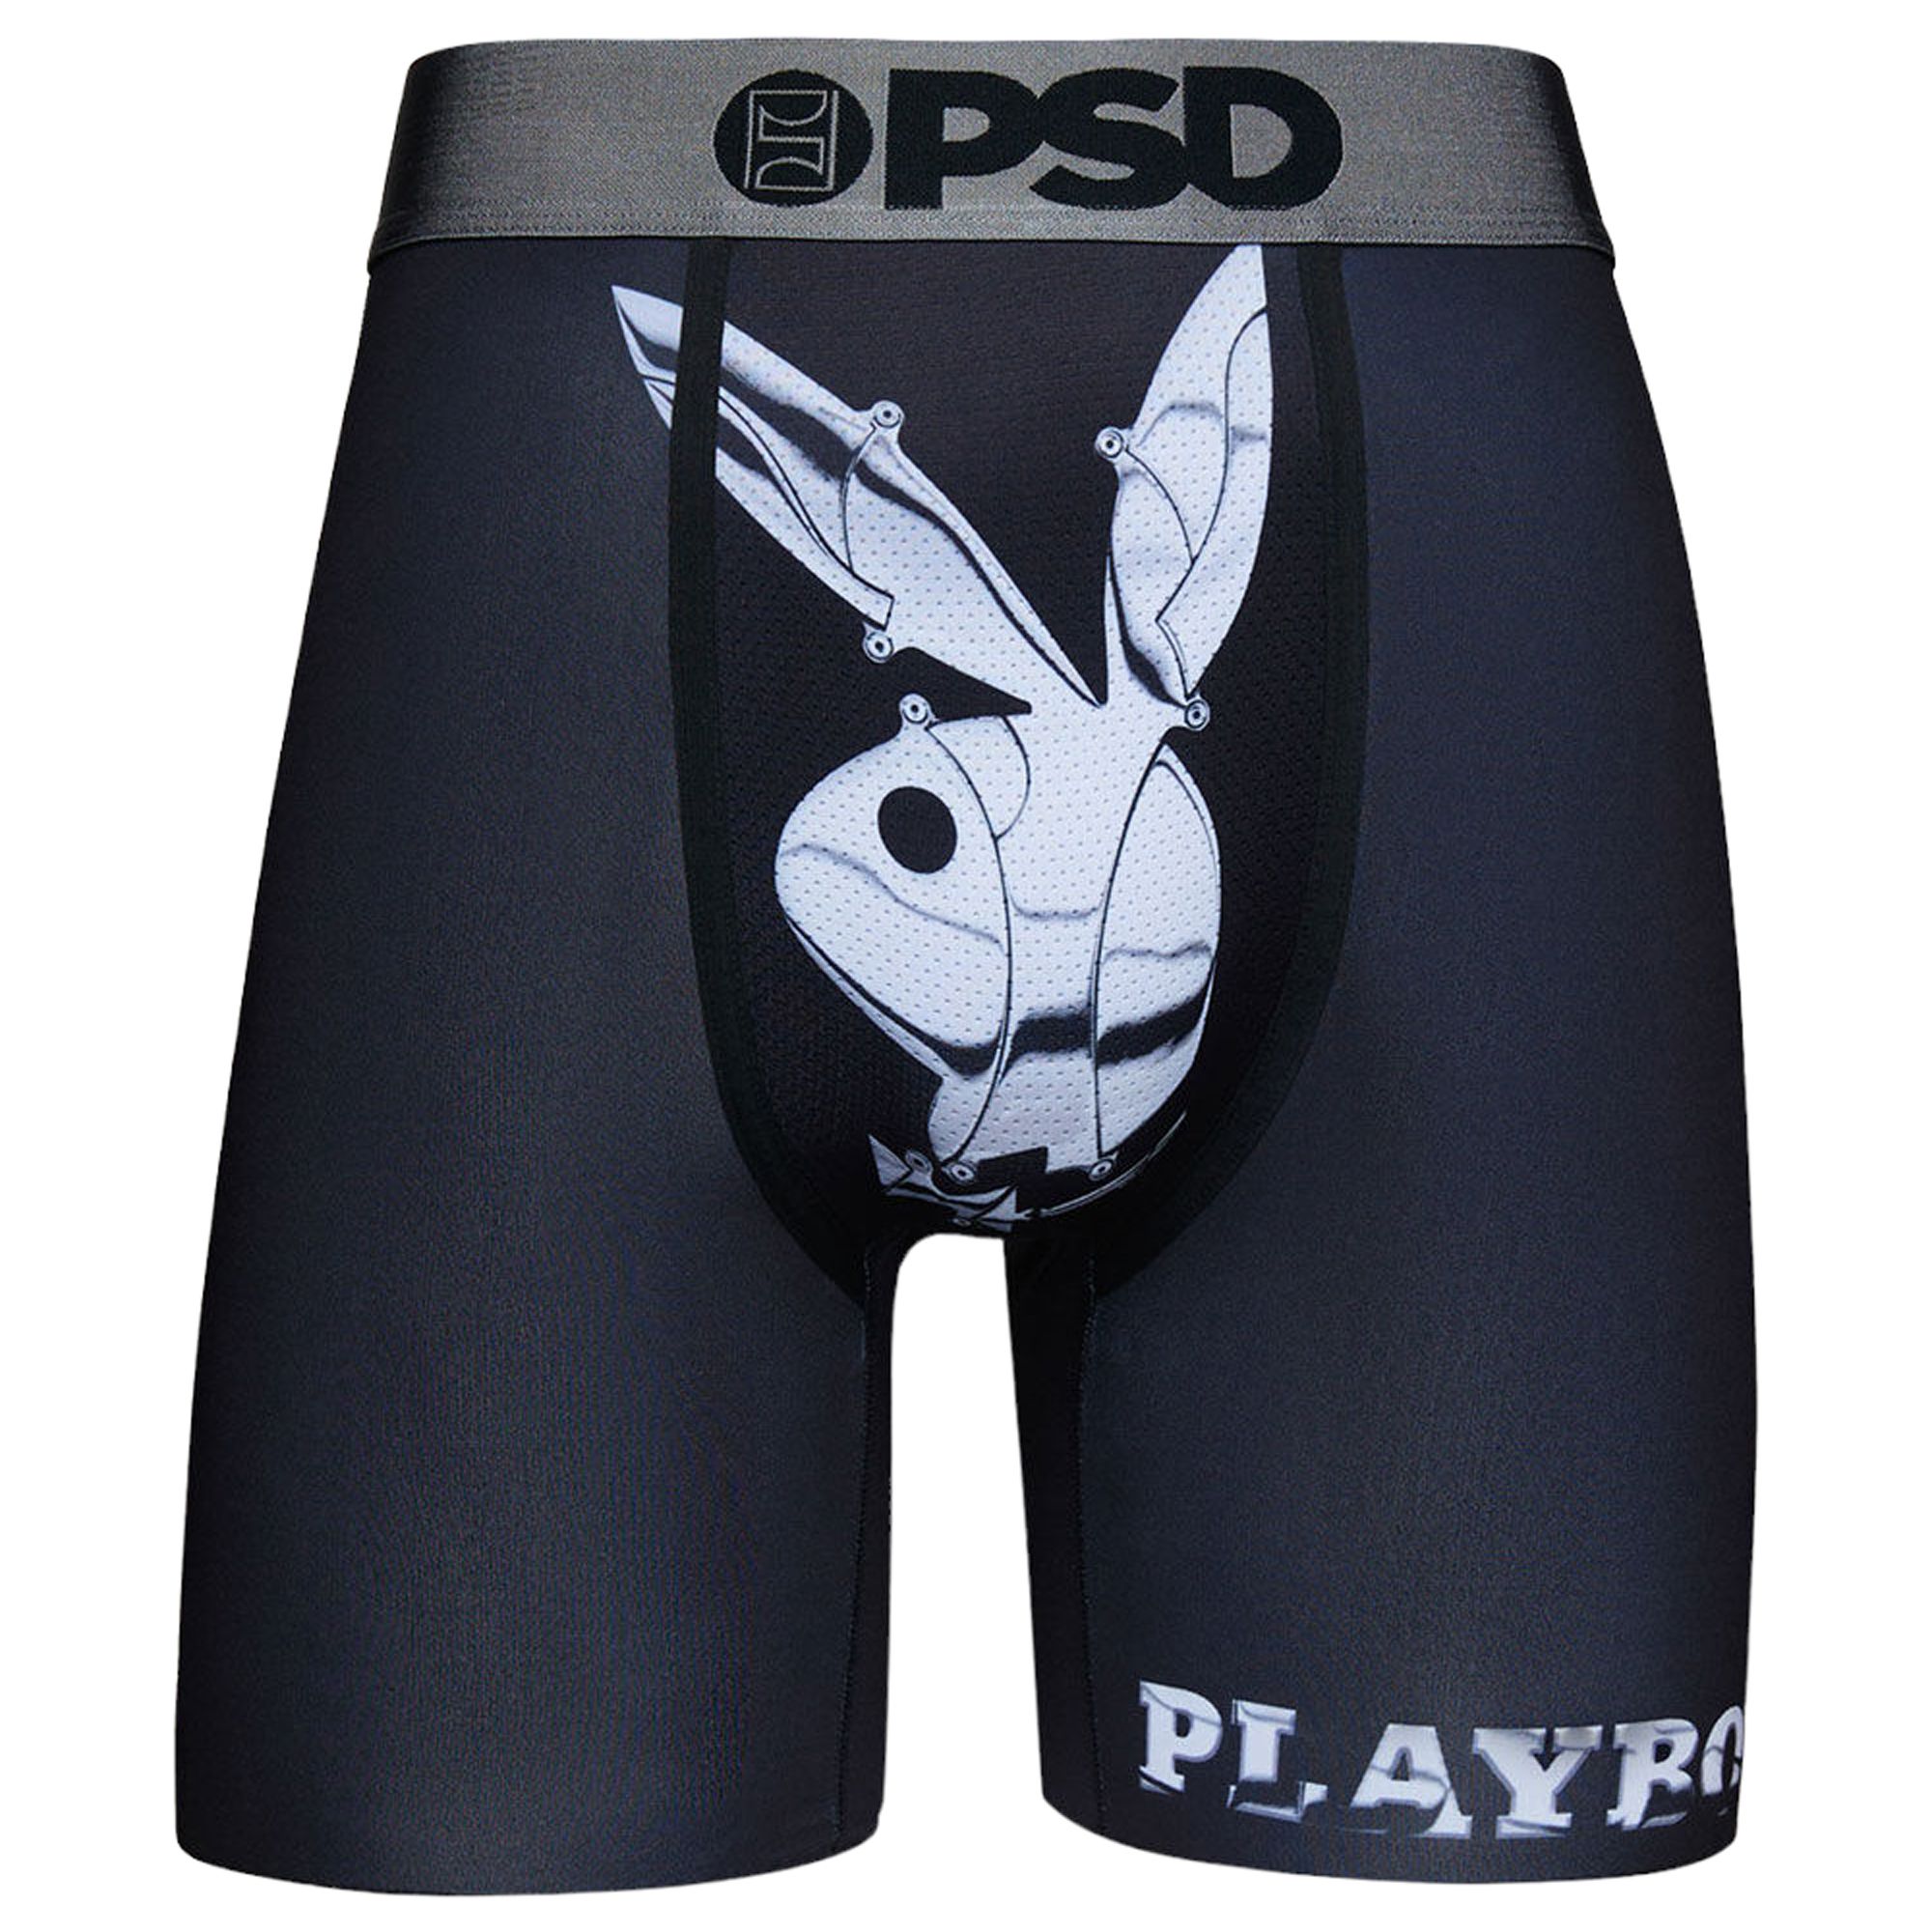 Playboy Checkered PSD Thong-XLarge 